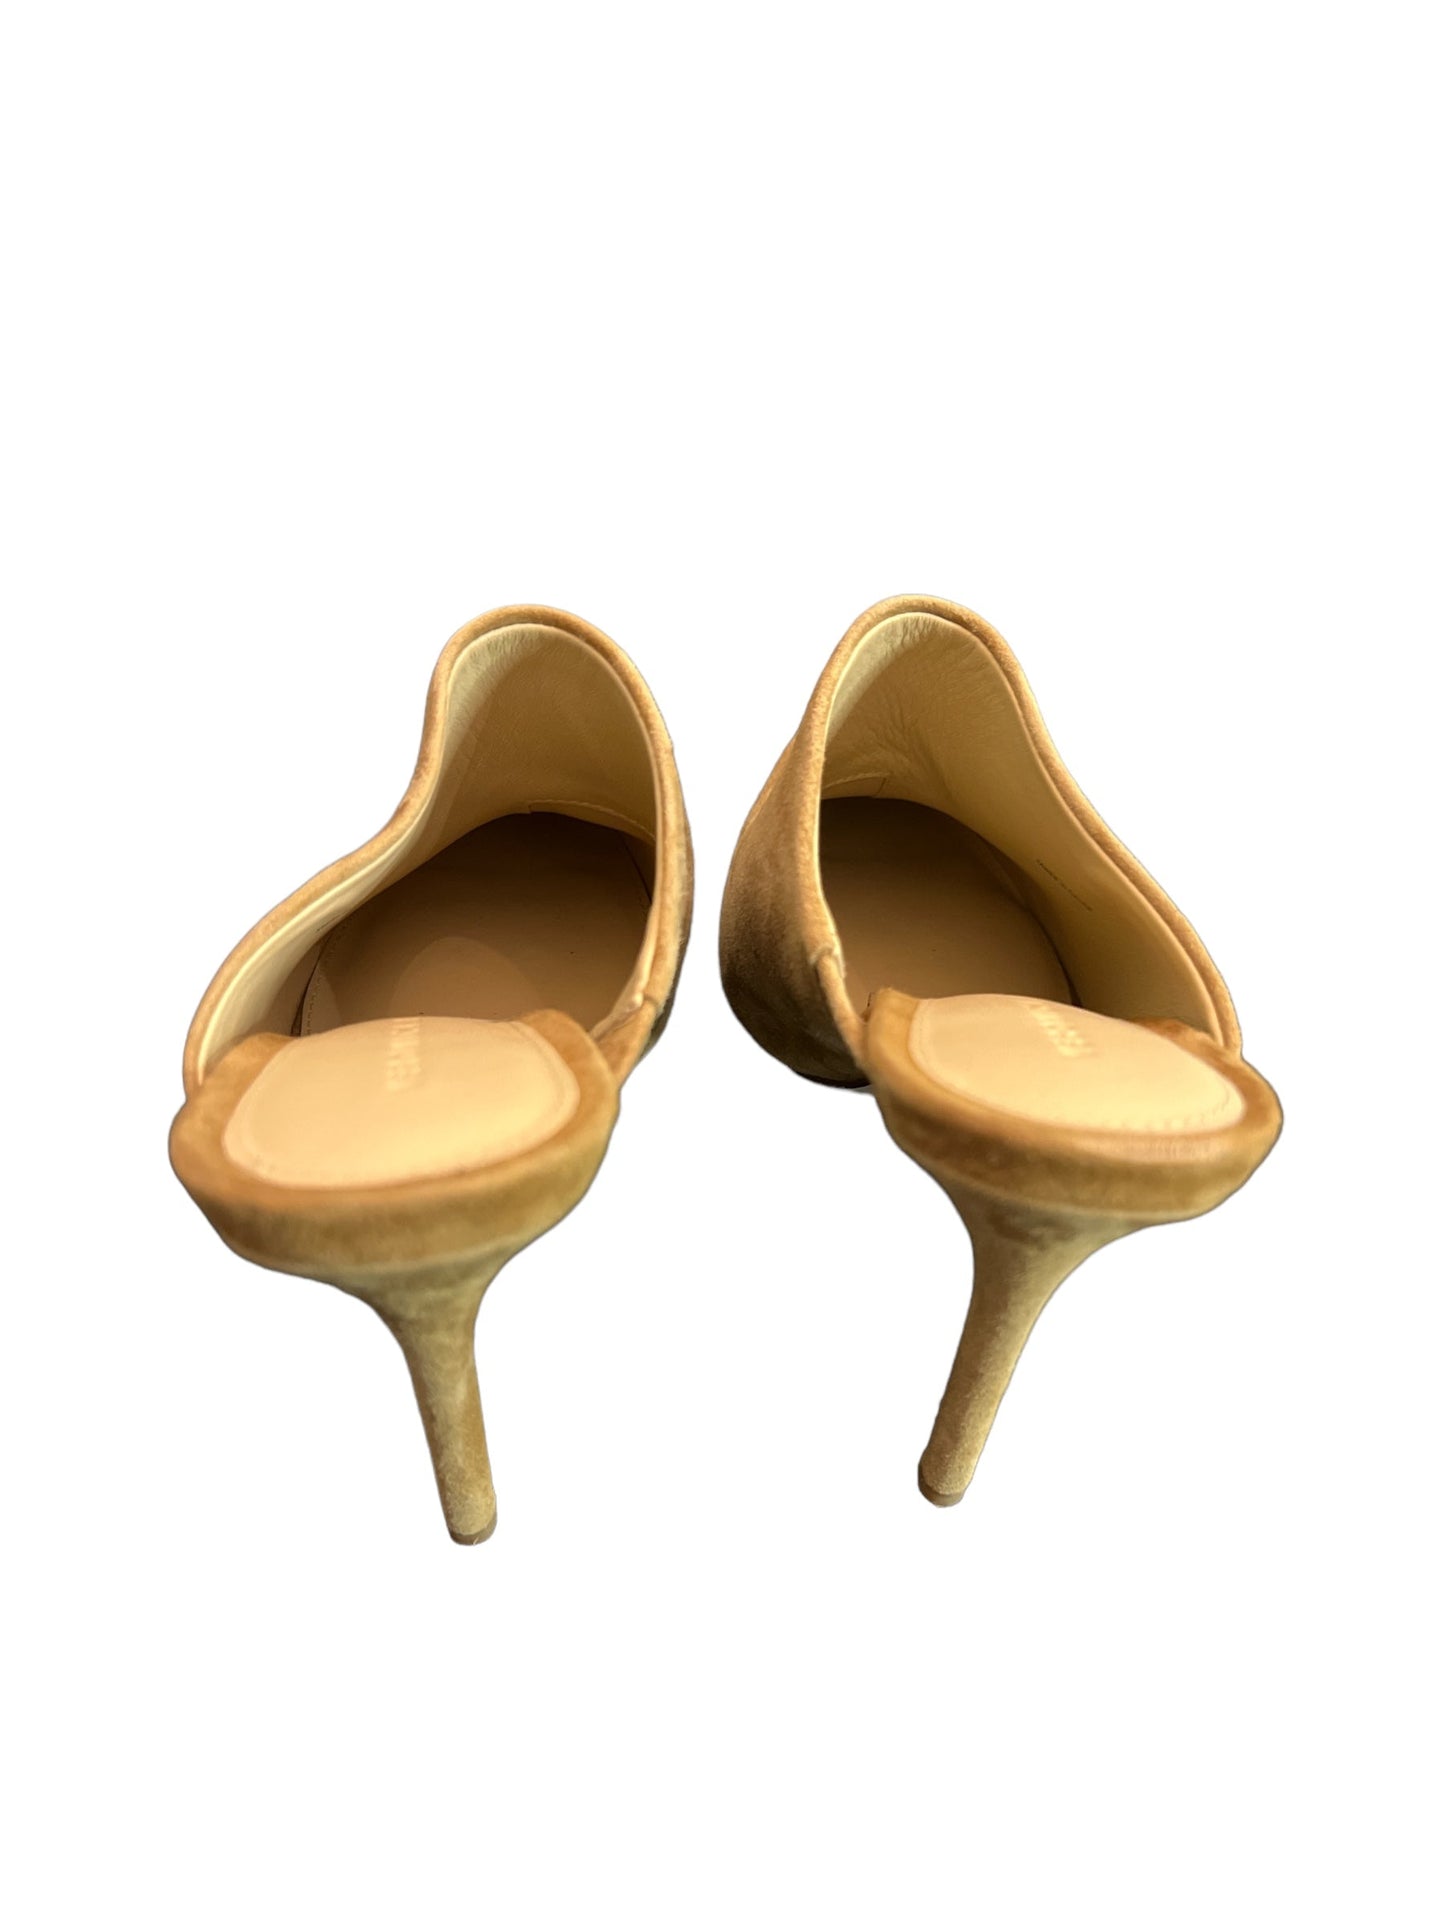 Shoes Heels Stiletto By Veronica Beard  Size: 6.5